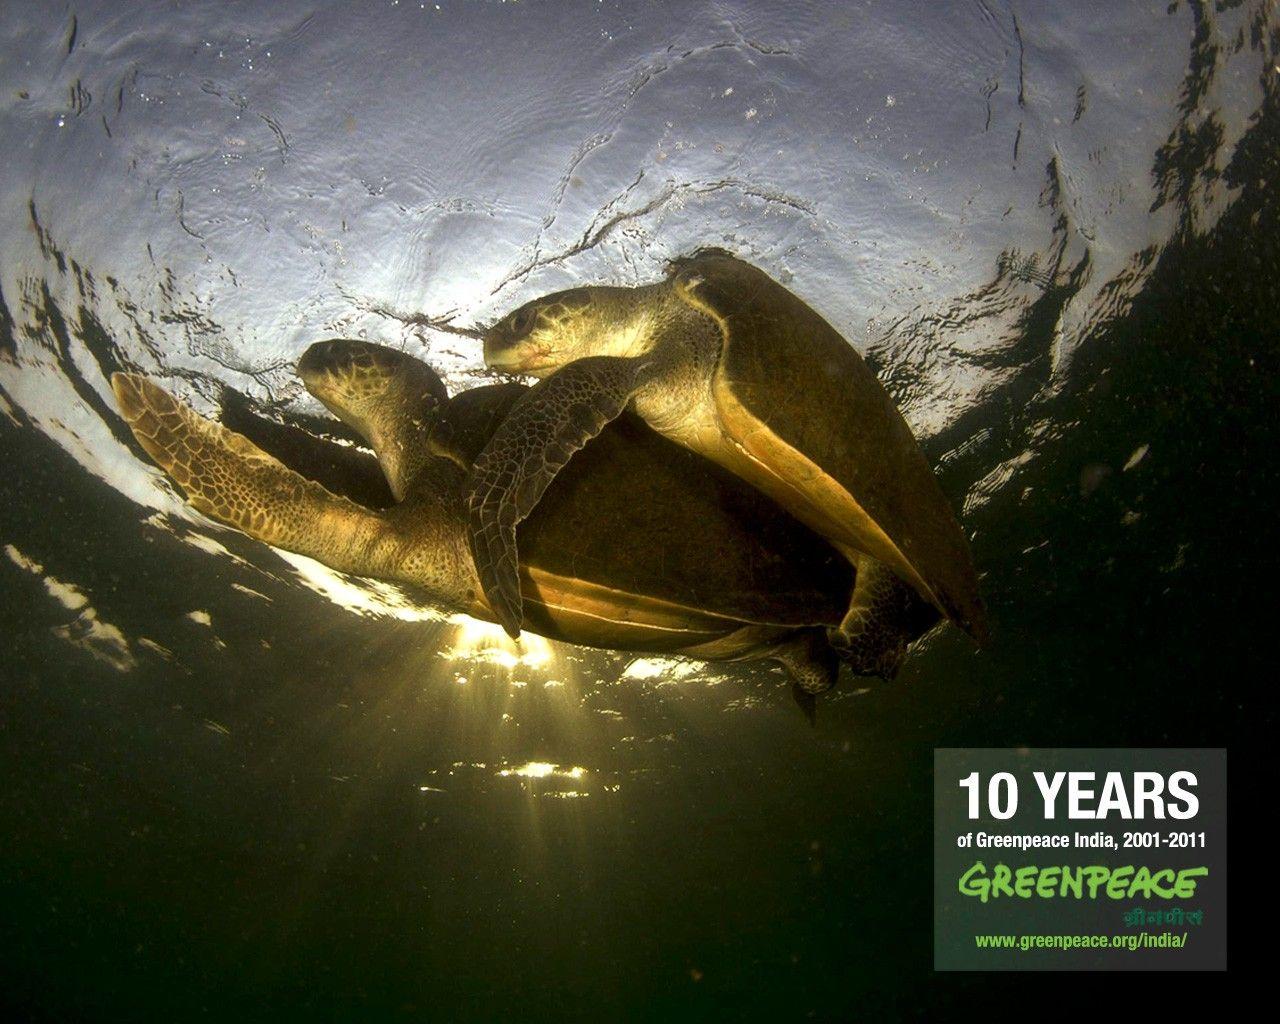 Misc: Turtle Years Peace India Sea Underwater Greenpeace Green